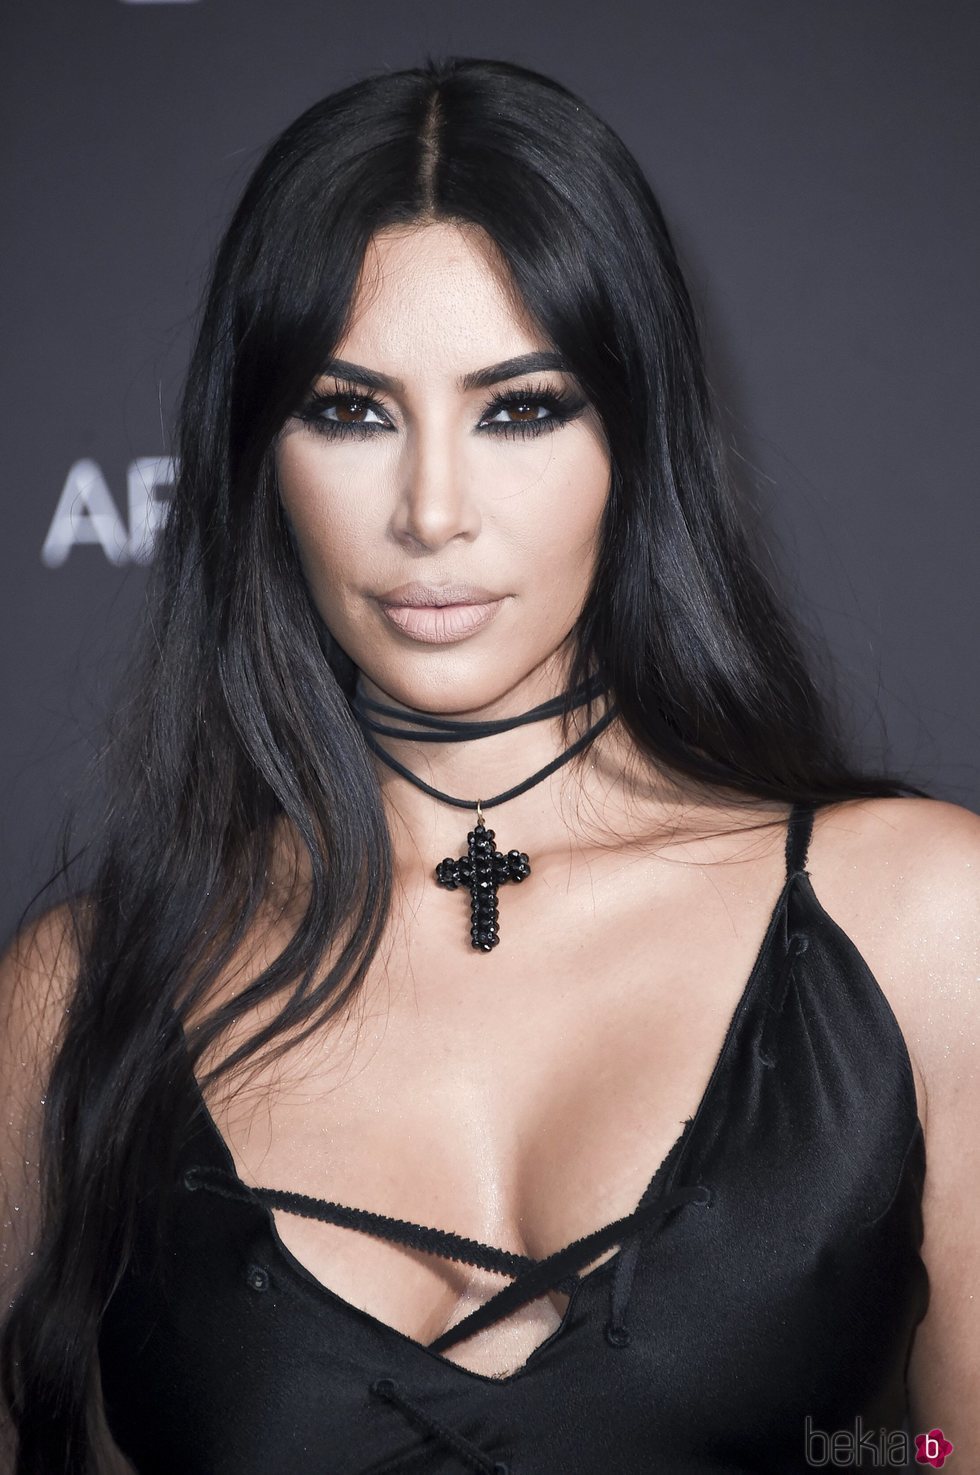 Kim Kardashian acierta con su maquillaje de noche